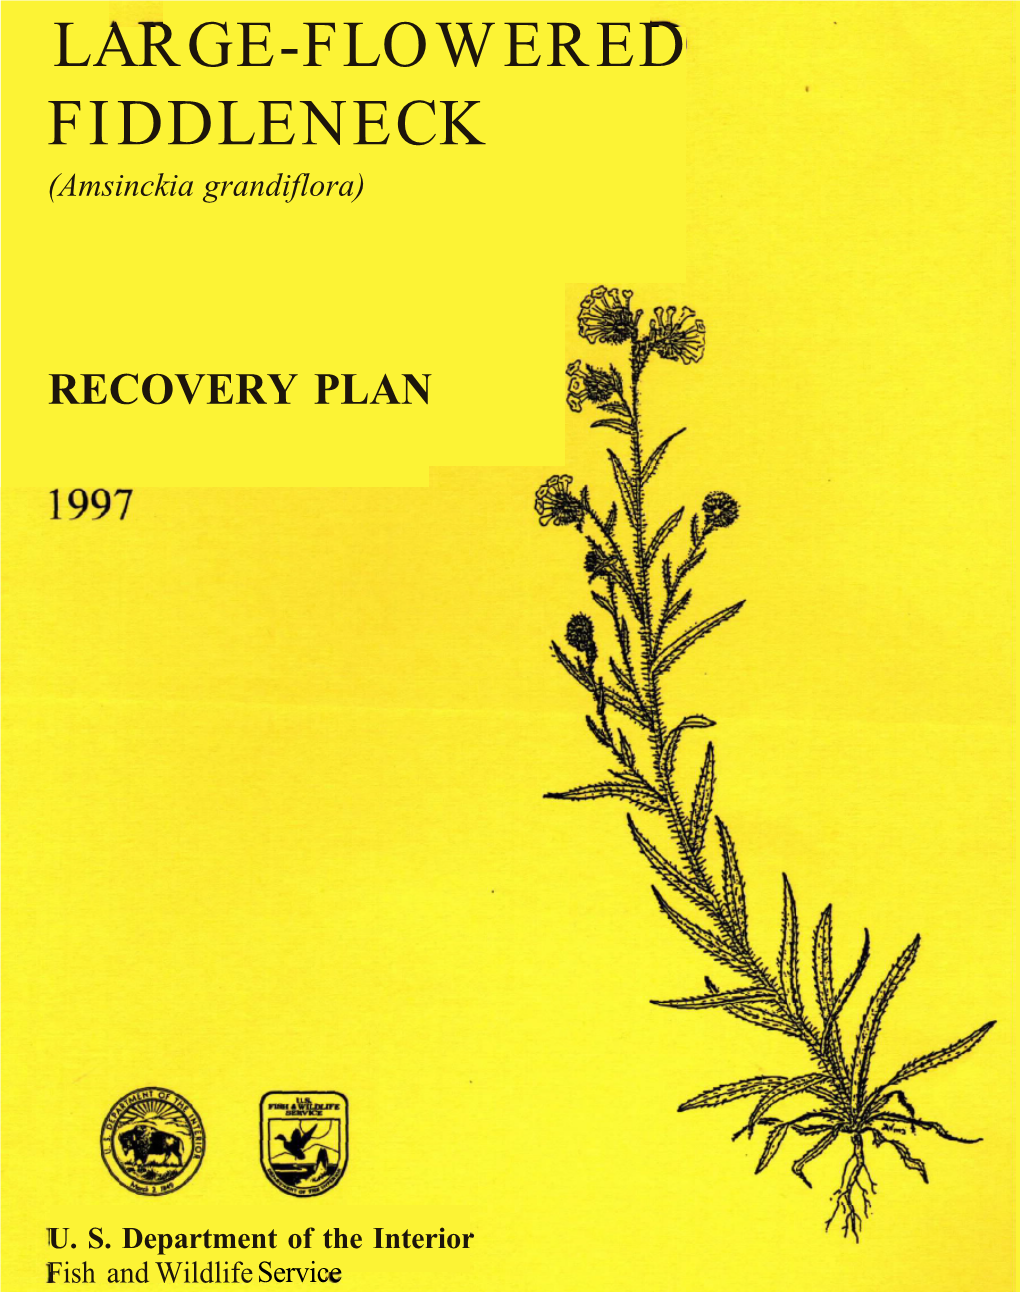 LARGE-FLOWERED FIDDLENECK (Amsinckia Grandiflora)